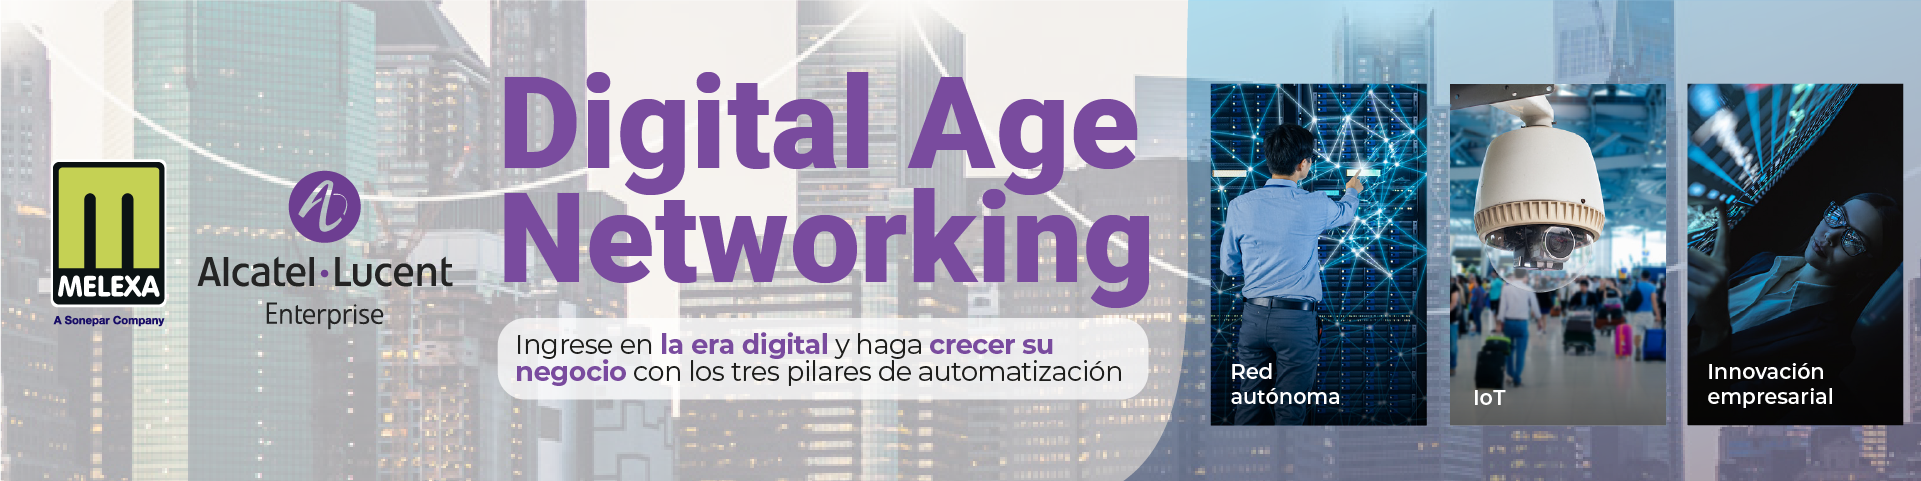 digital age networking